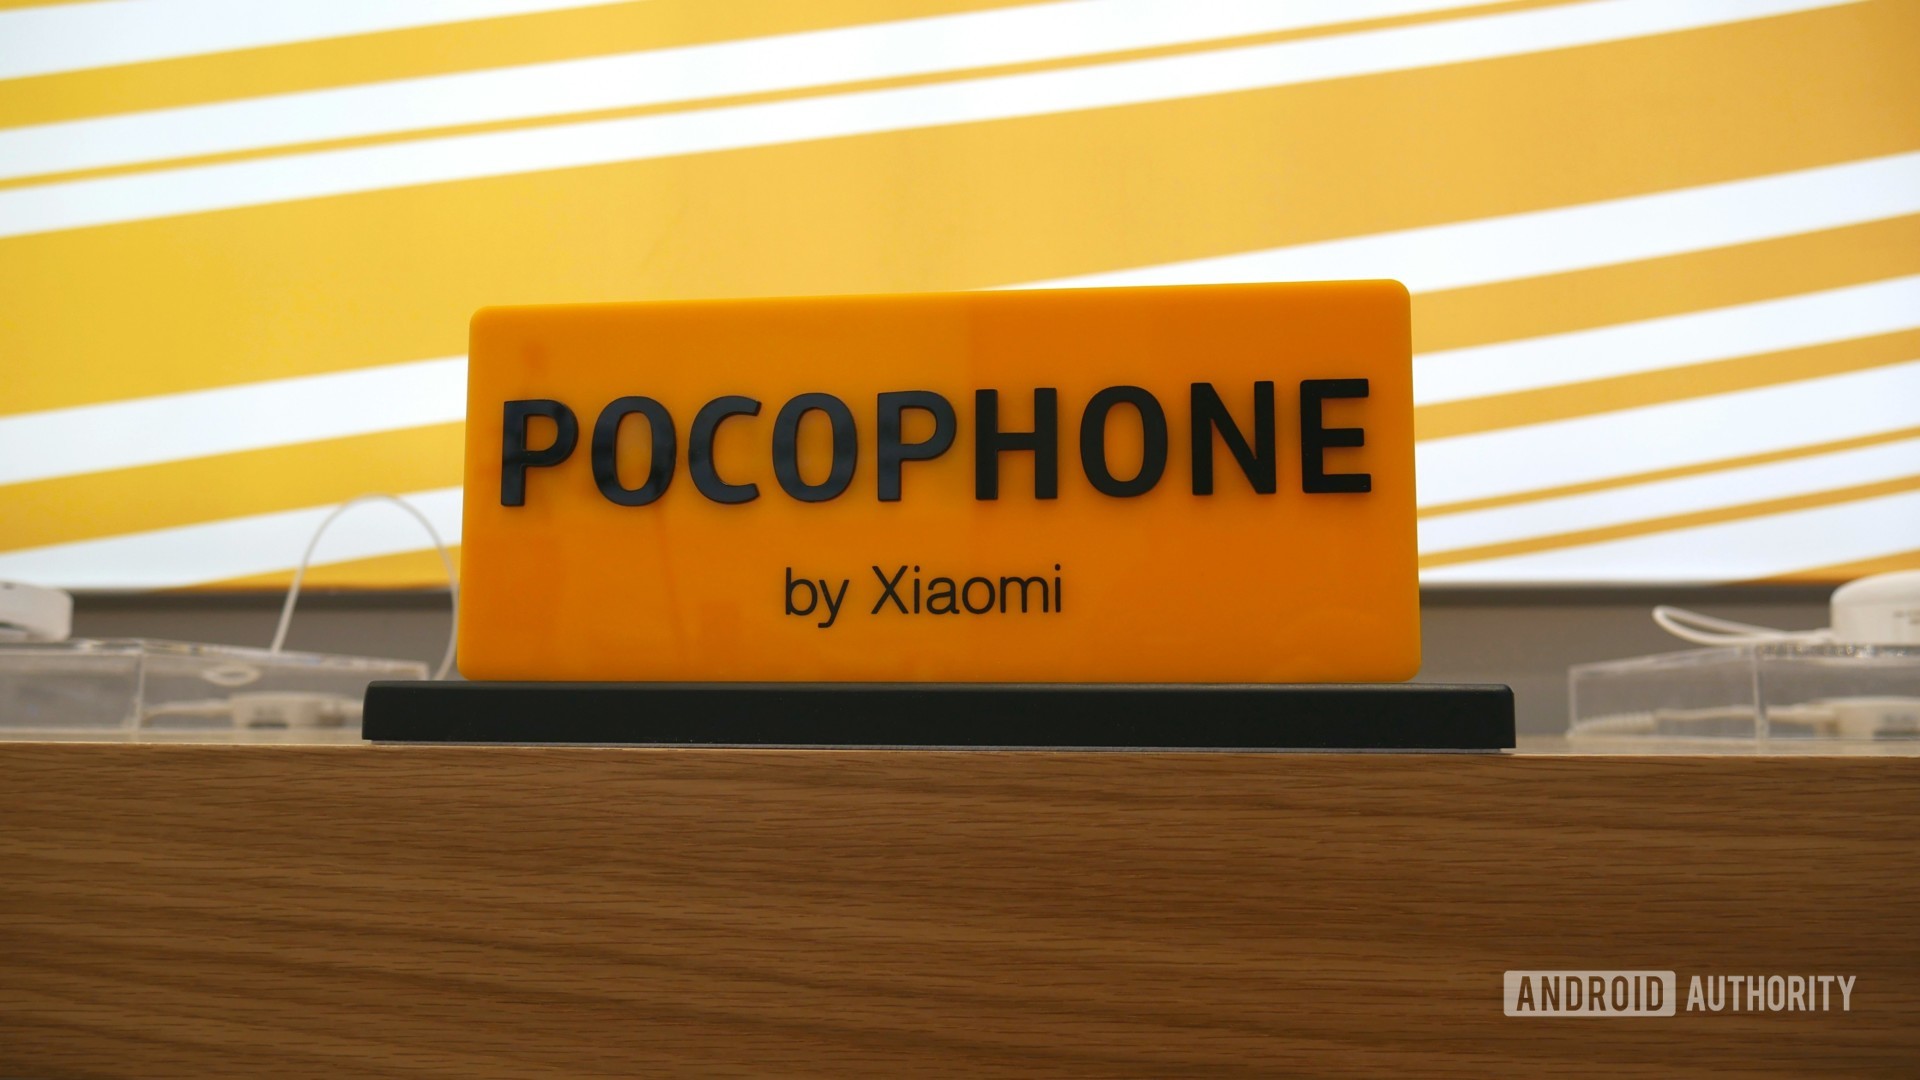 Pocophone logo